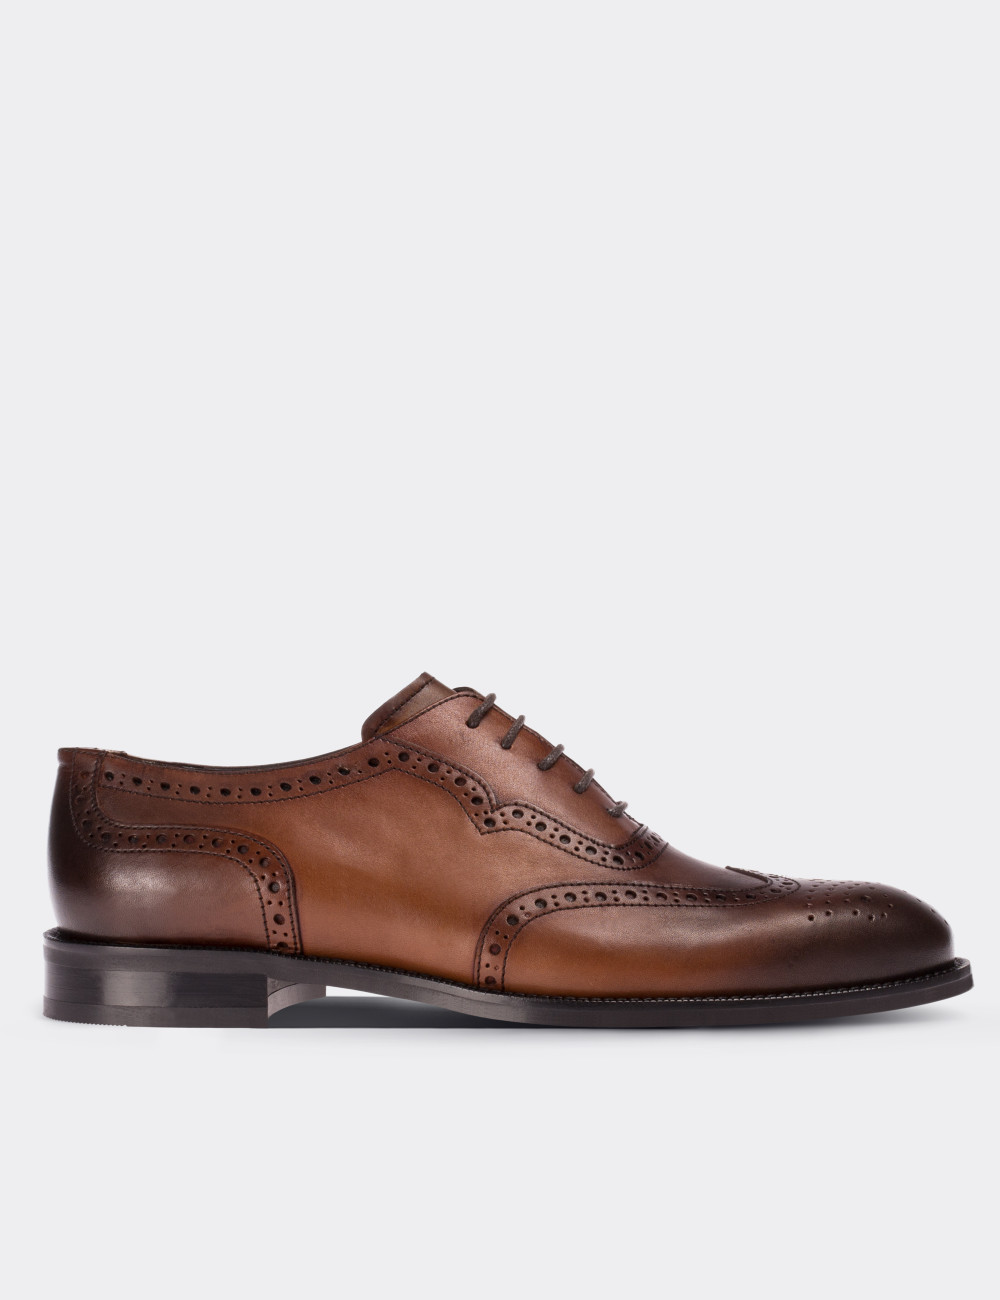 Tan Calfskin Leather Classic Shoes - Deery